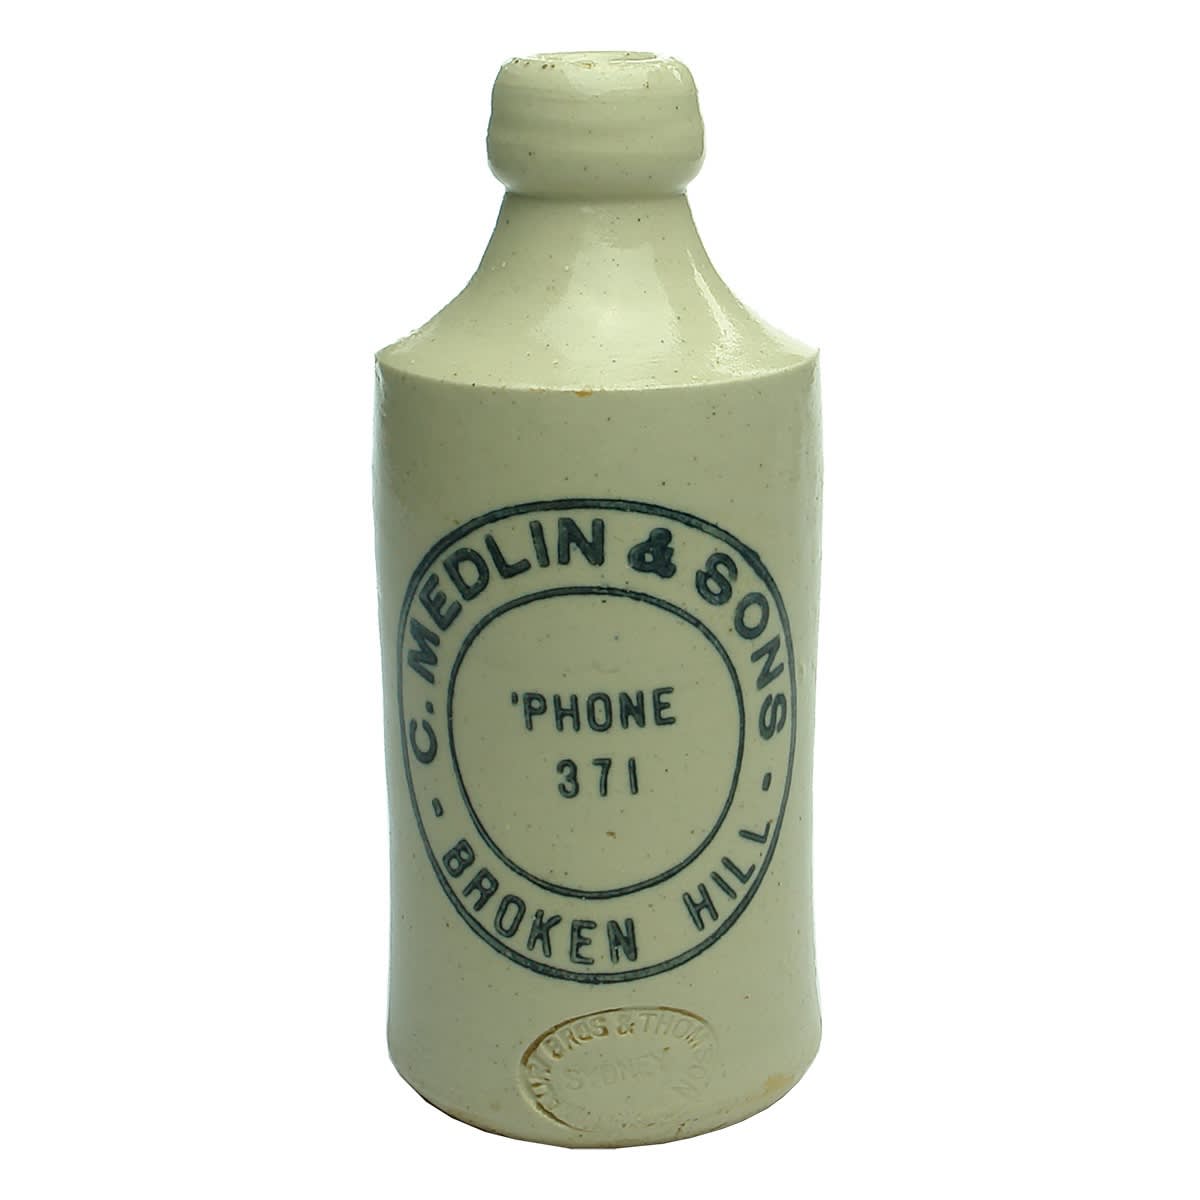 Ginger Beer. C. Medlin & Sons, Broken Hill. Dump. All White. 10 oz. (New South Wales)